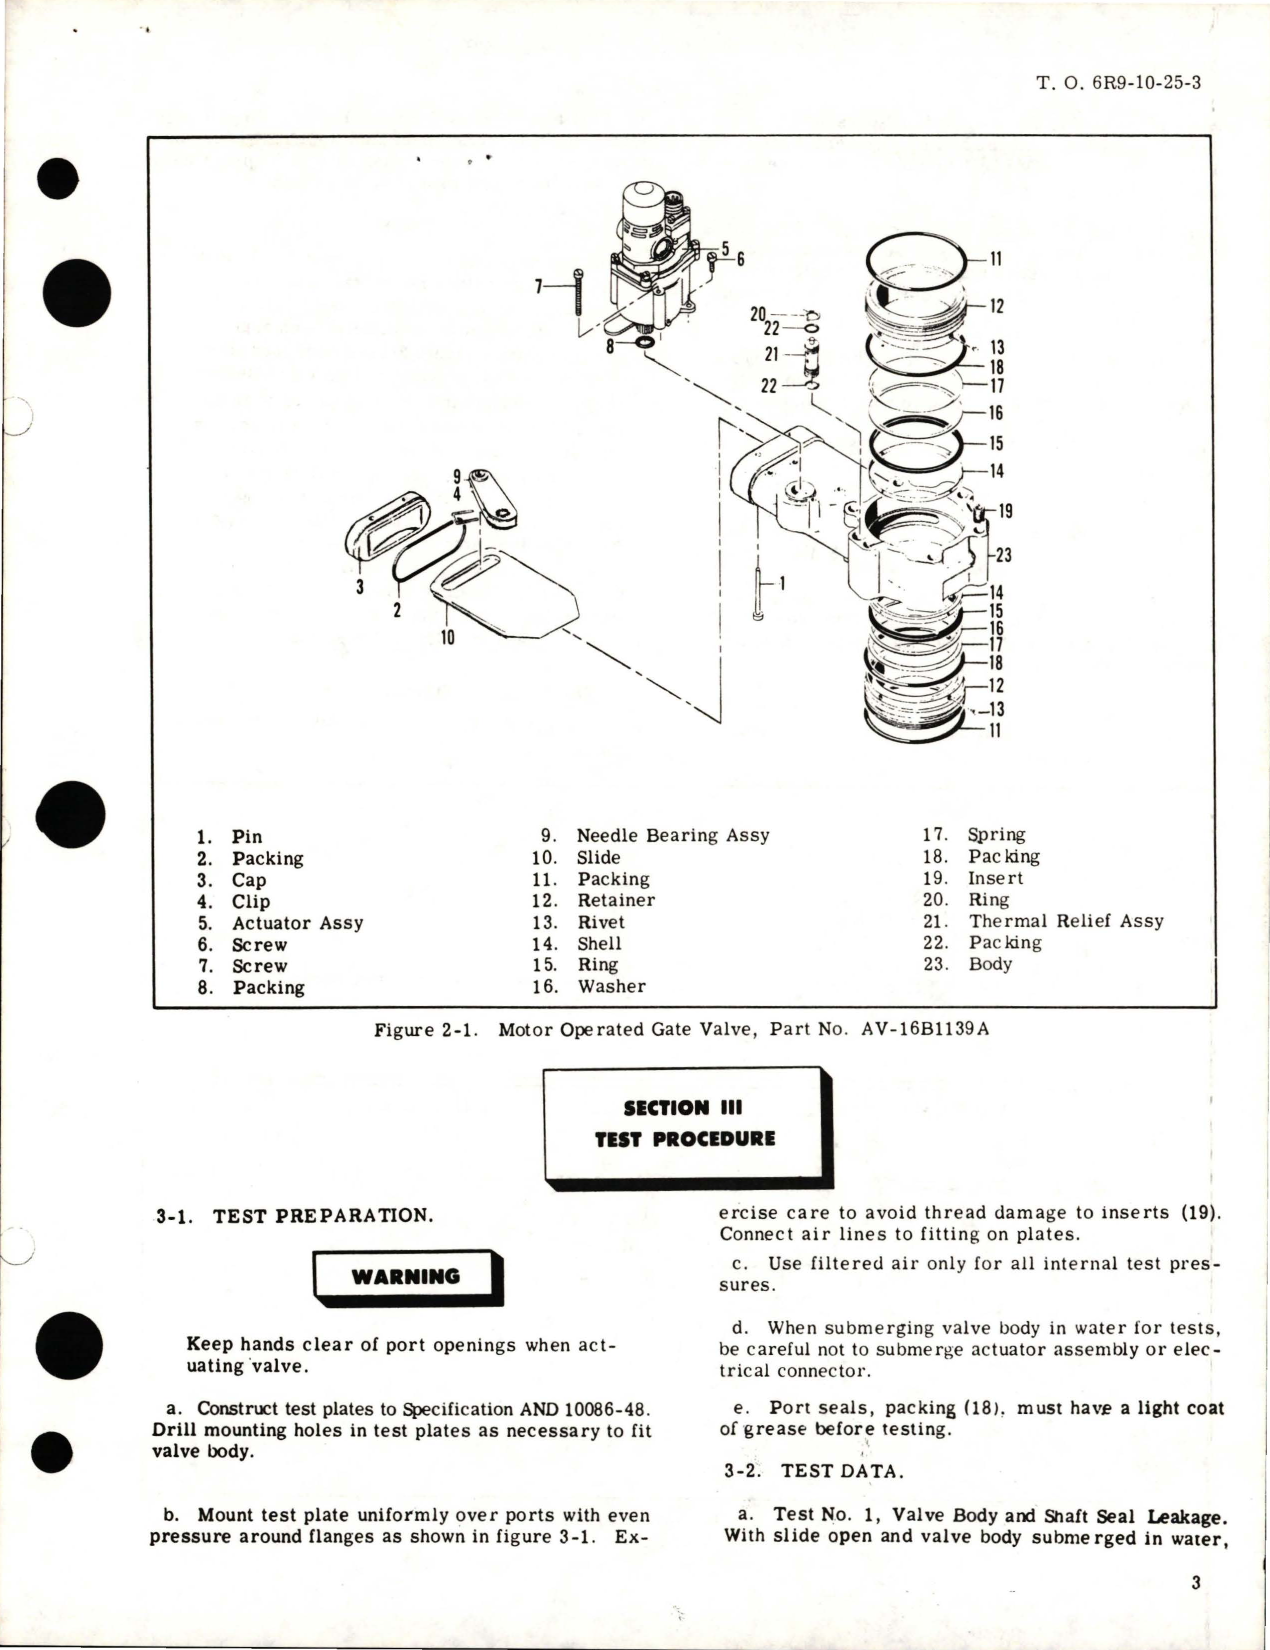 Sample page 9 from AirCorps Library document: Overhaul Instructions for Motor Operated Gate Valve - AV-16B Series - Part AV-16B1139A and Similar Valves